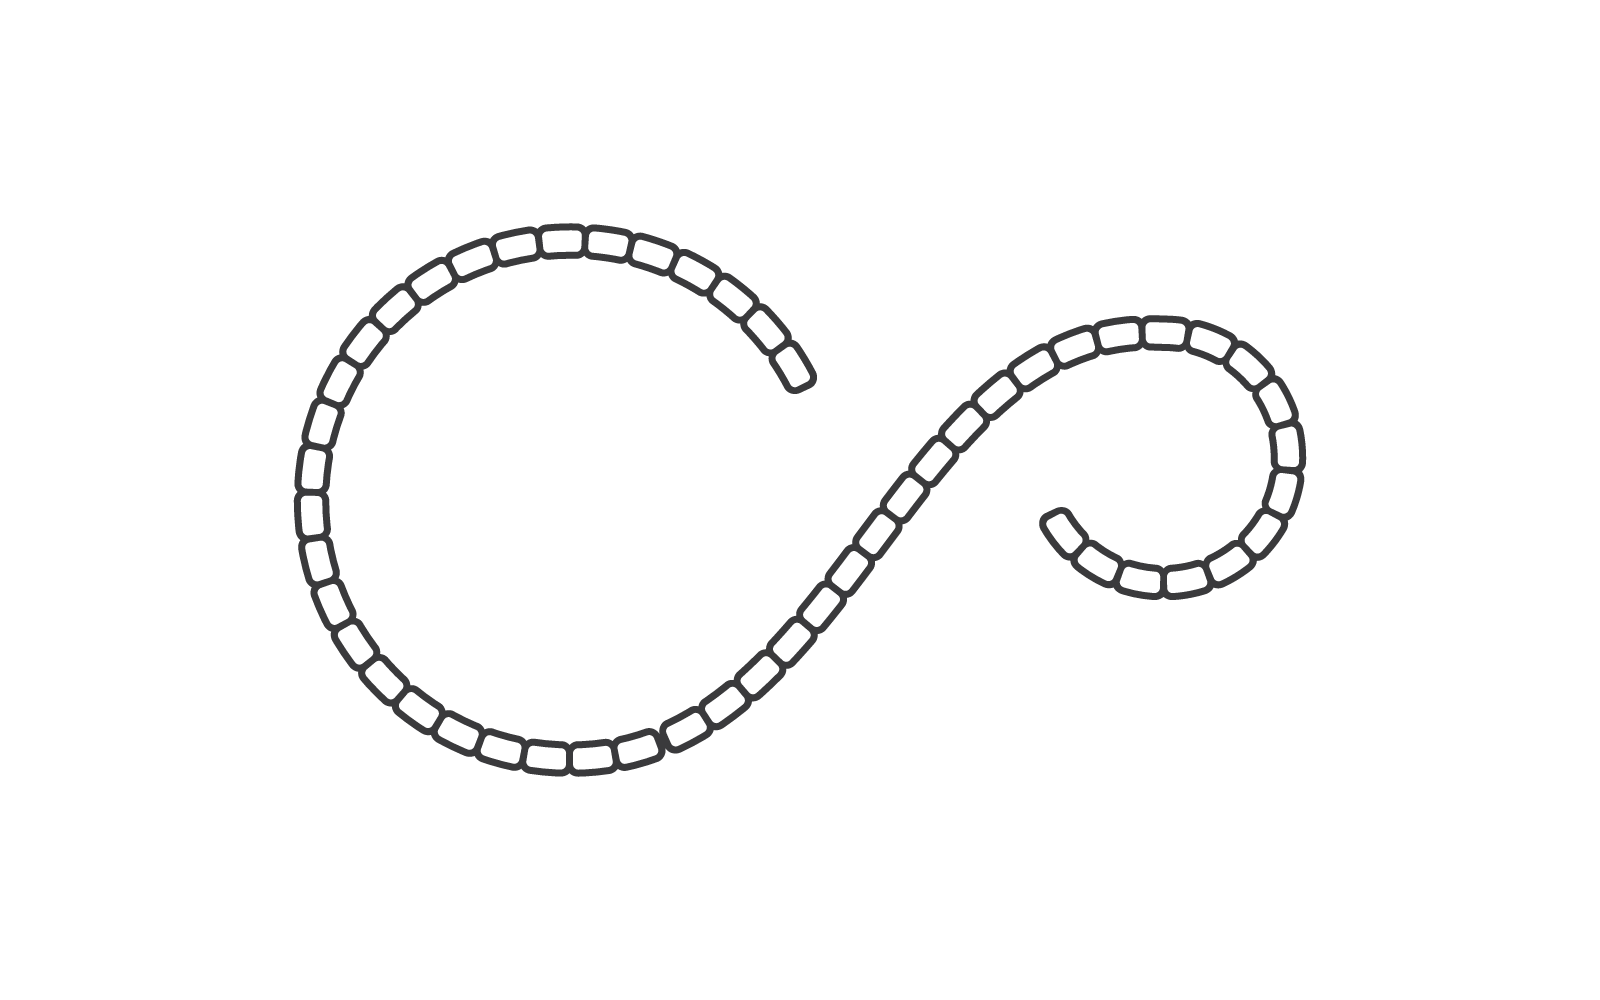 Chain illustration logo vector design template